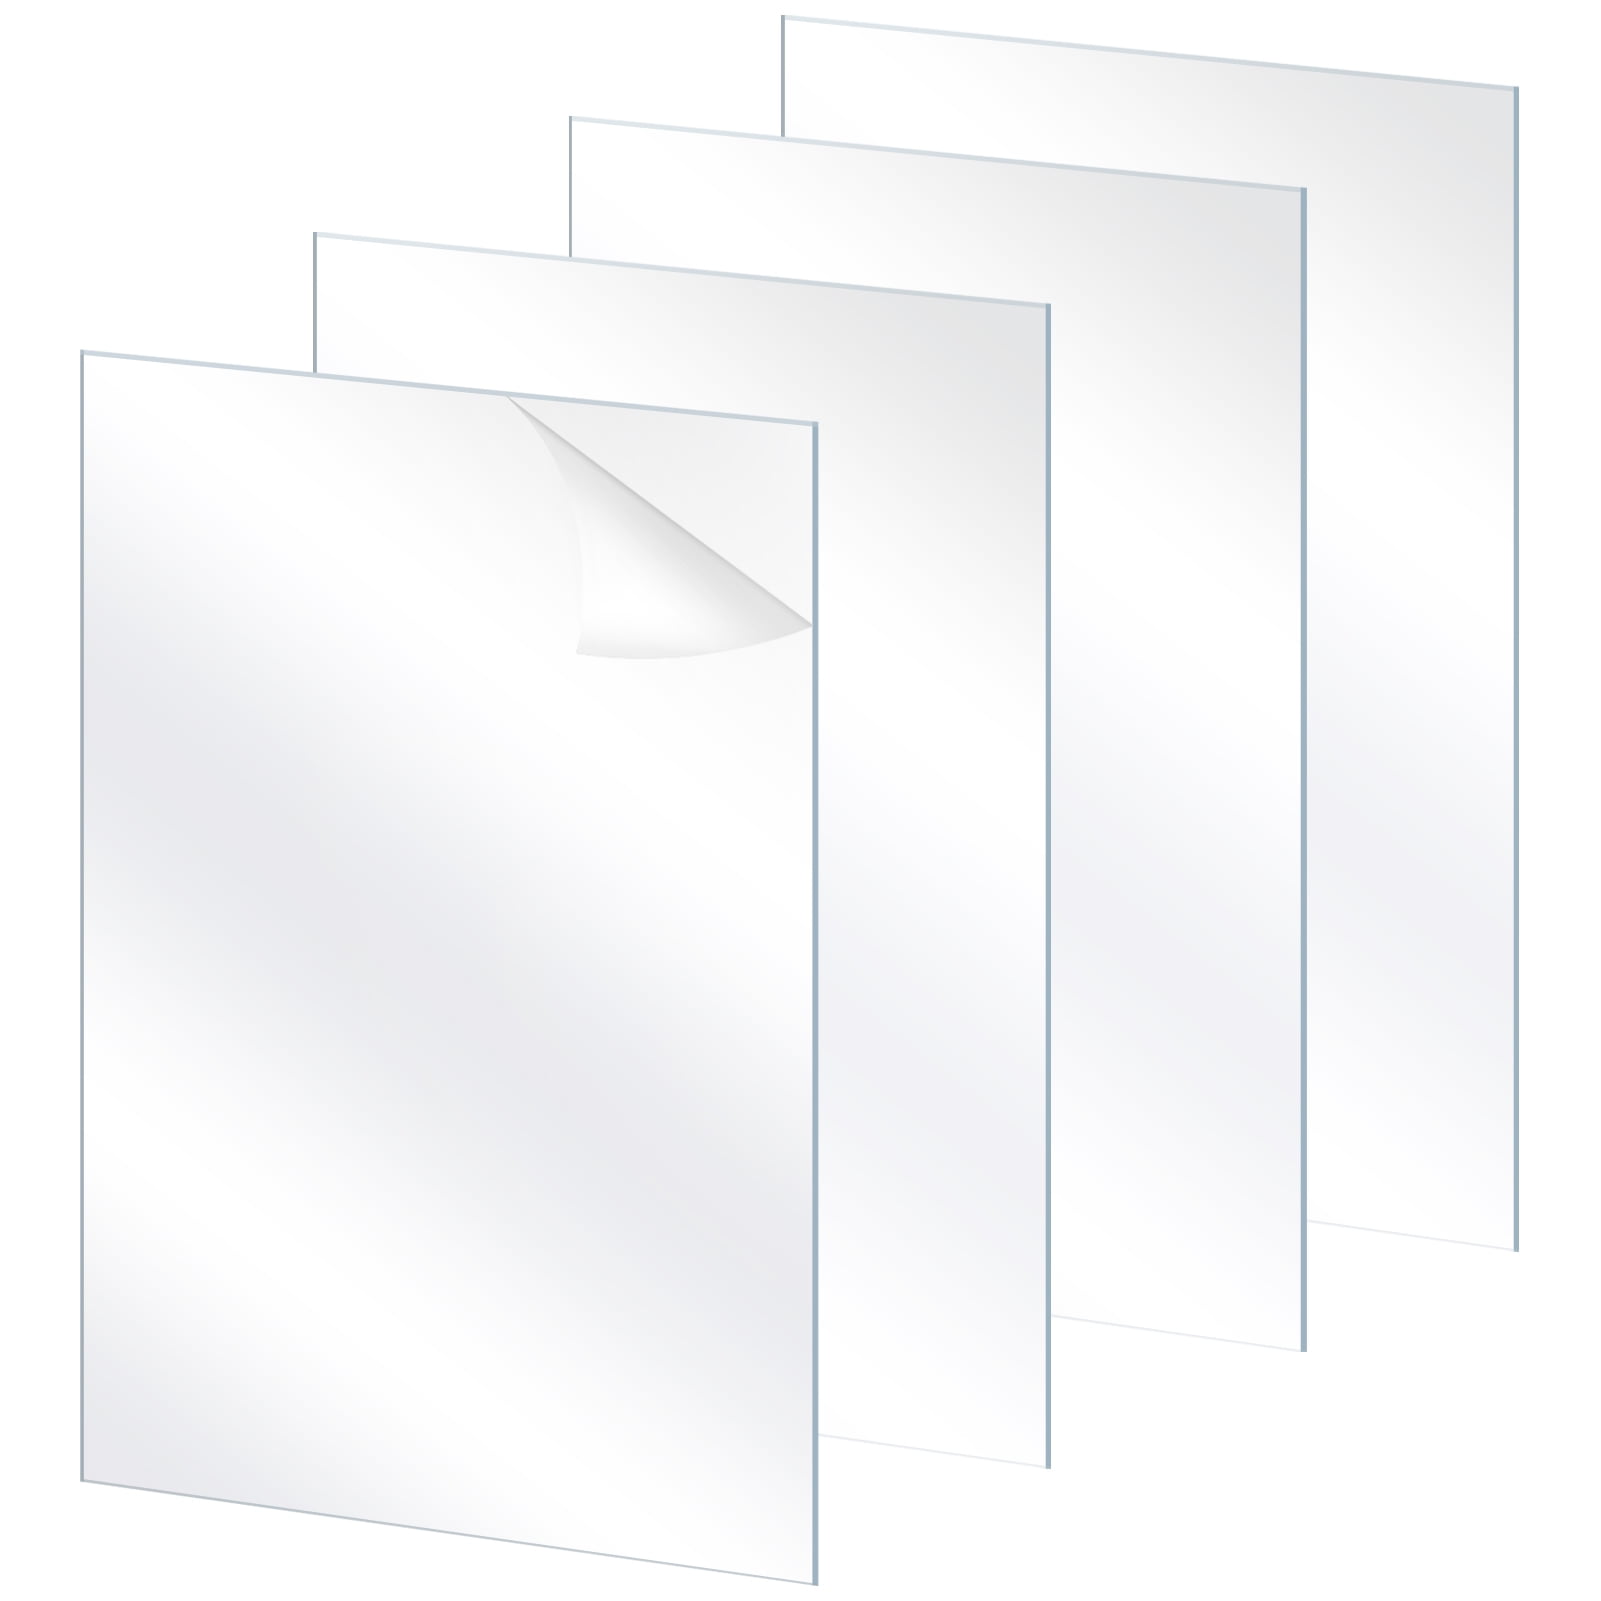 Silver Shiny Acrylic Plexiglass Sheet Opaque Plastic Square Panel Shinning  Board for DIY,Sign,Cricut Cutting,Advertising,Decor - AliExpress